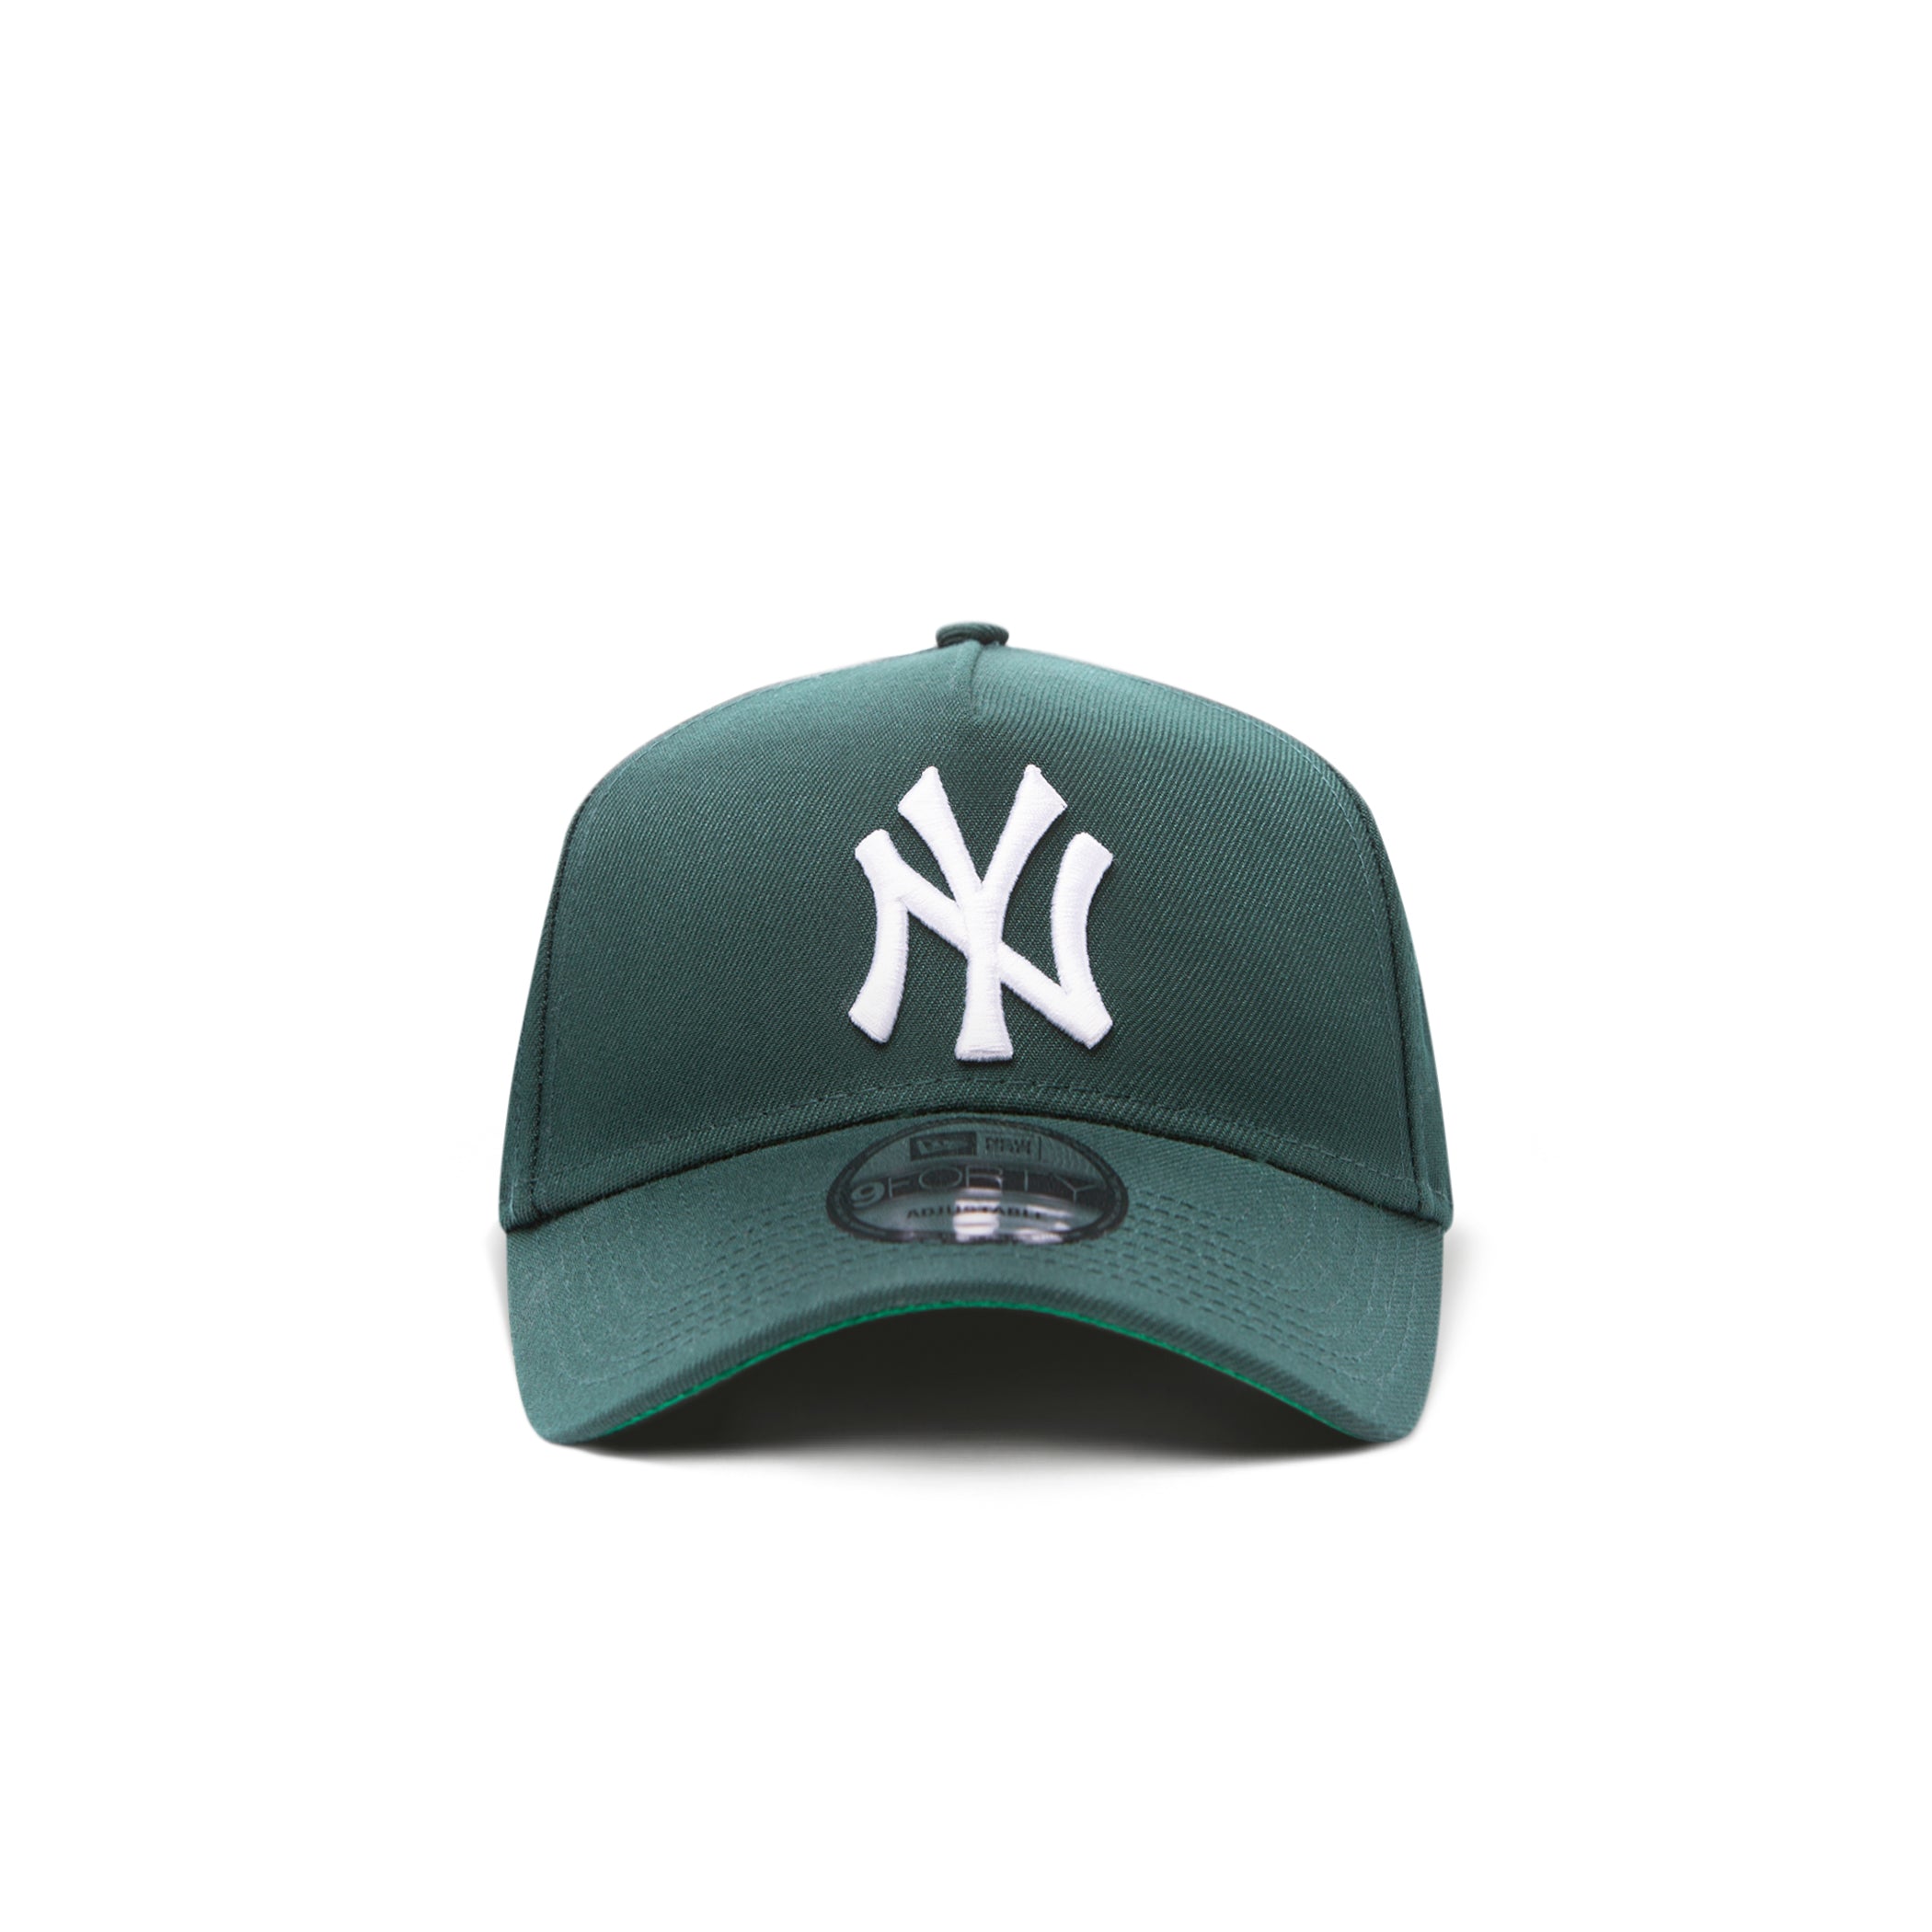 New era MLB New York Yankees Team Logo Hoodie Black